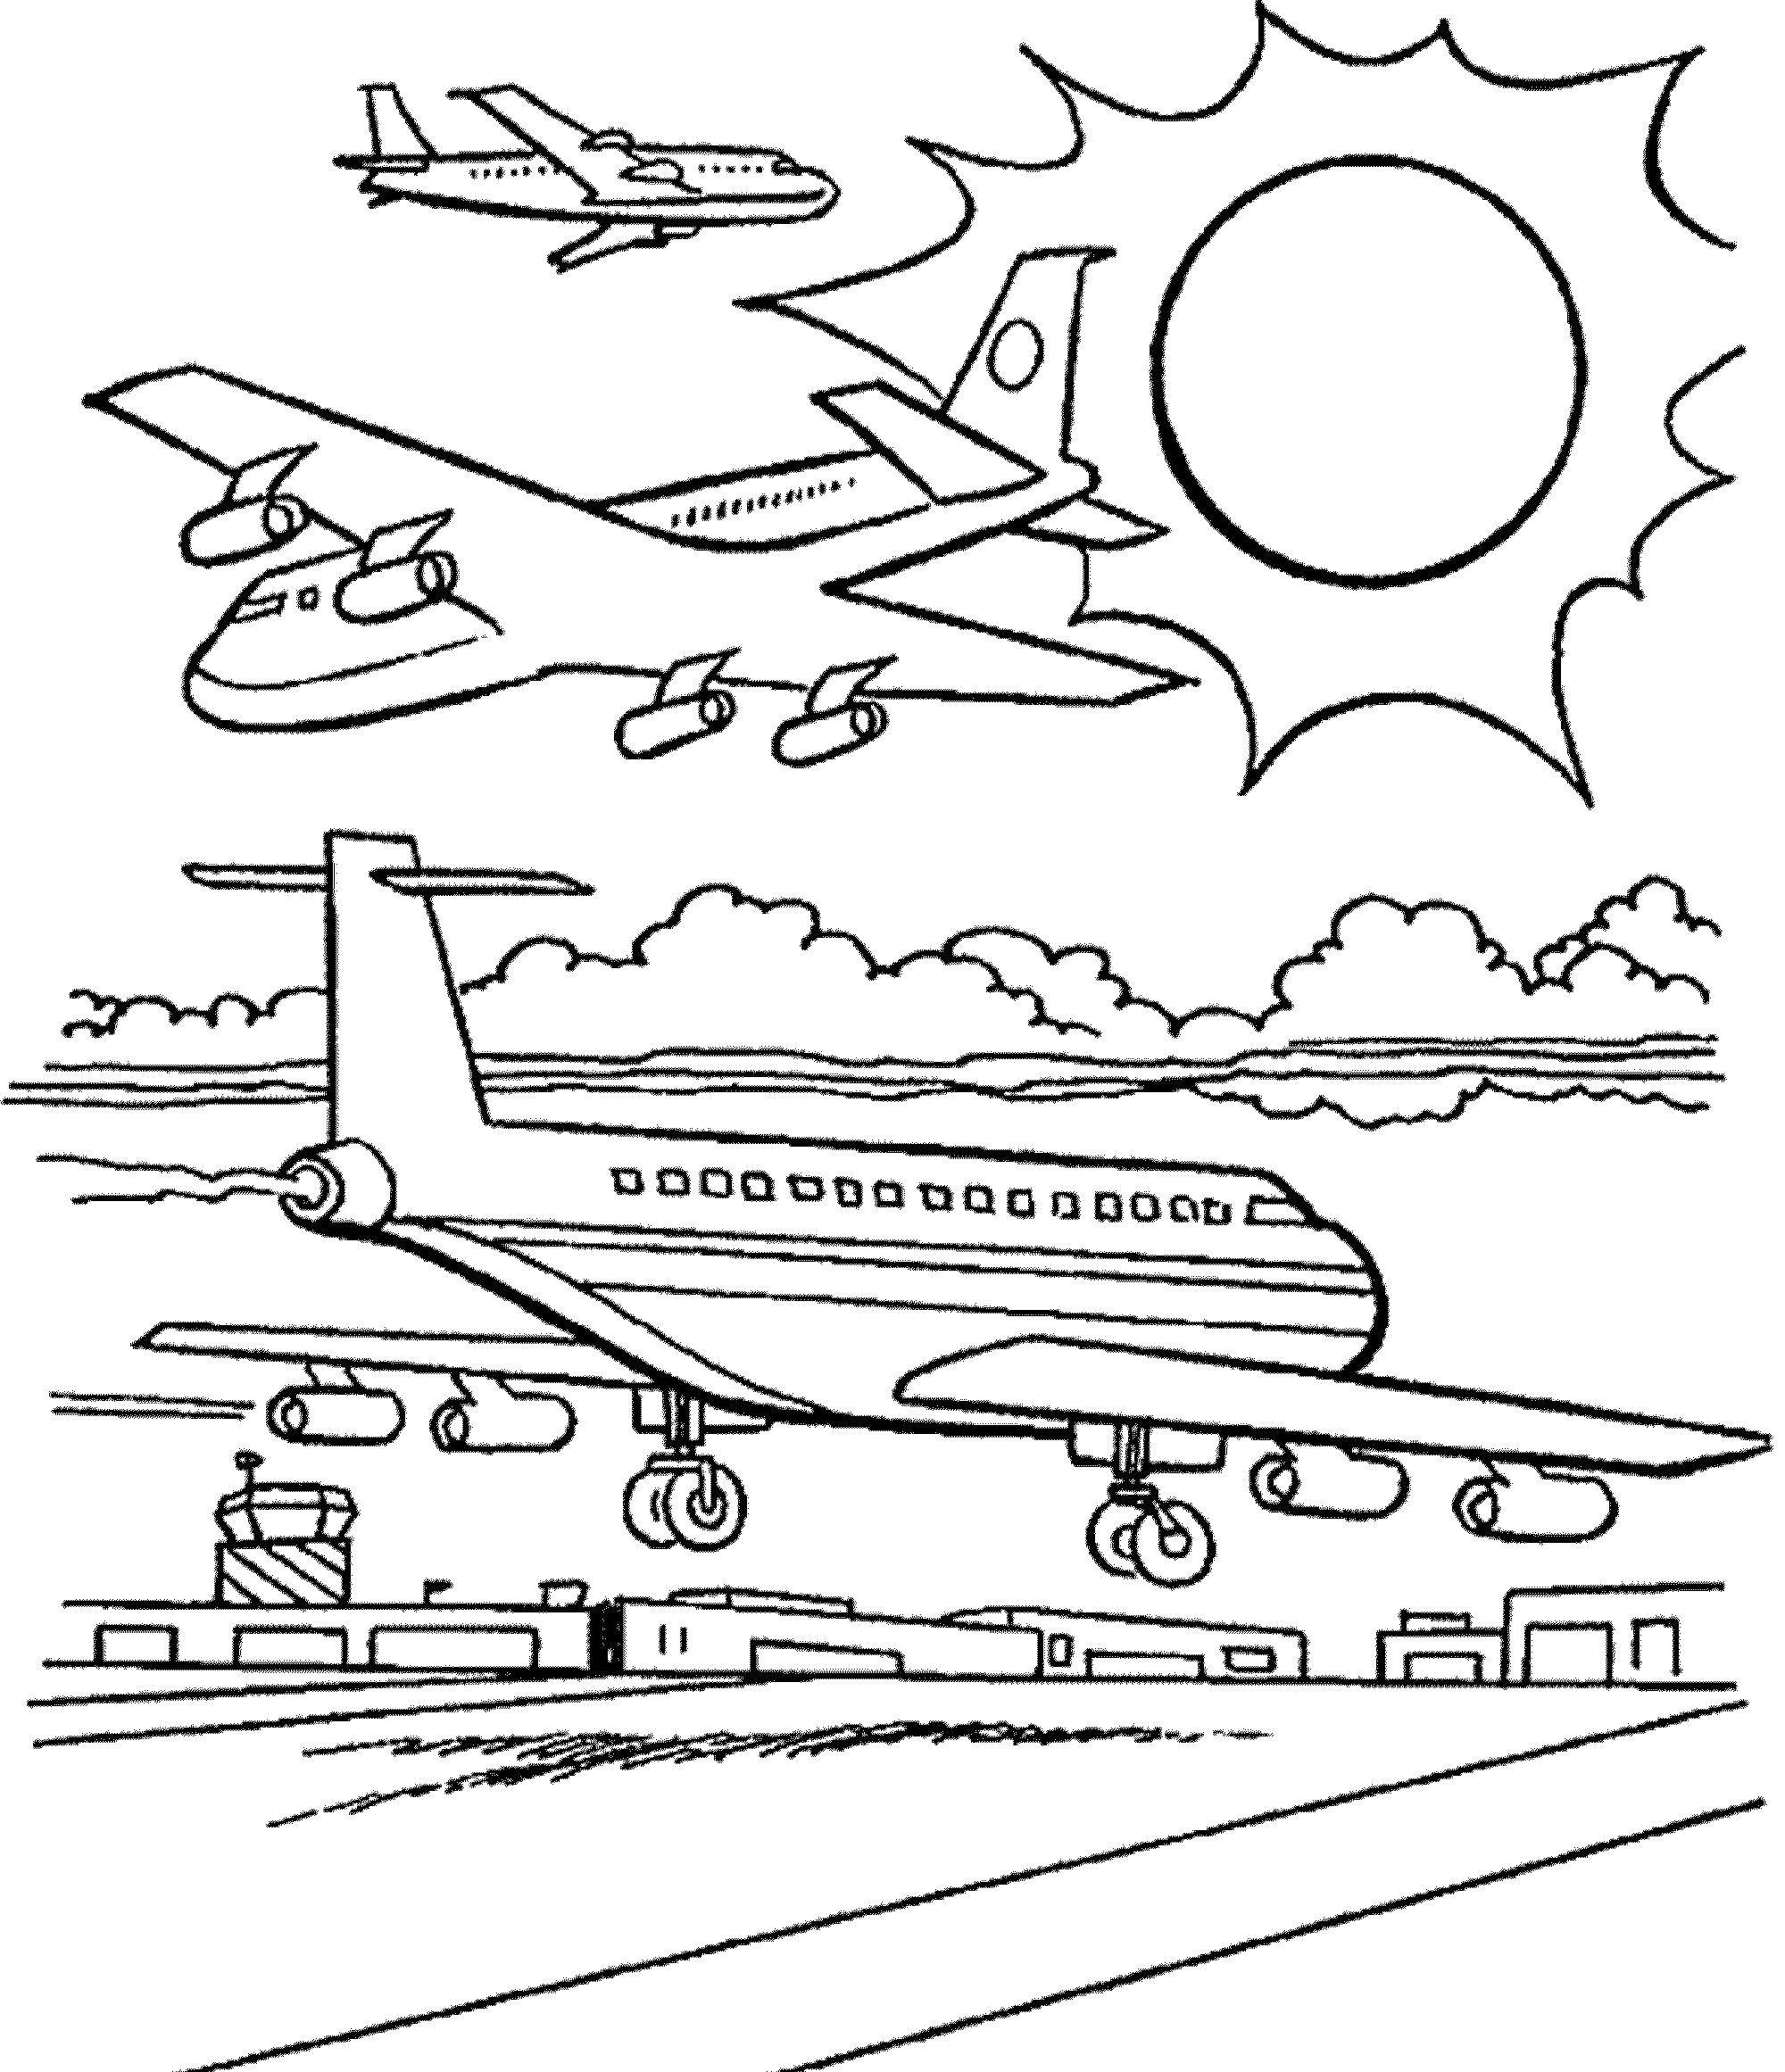 Название: Раскраска Посадка самолёта. Категория: Самолеты. Теги: Самолёт.